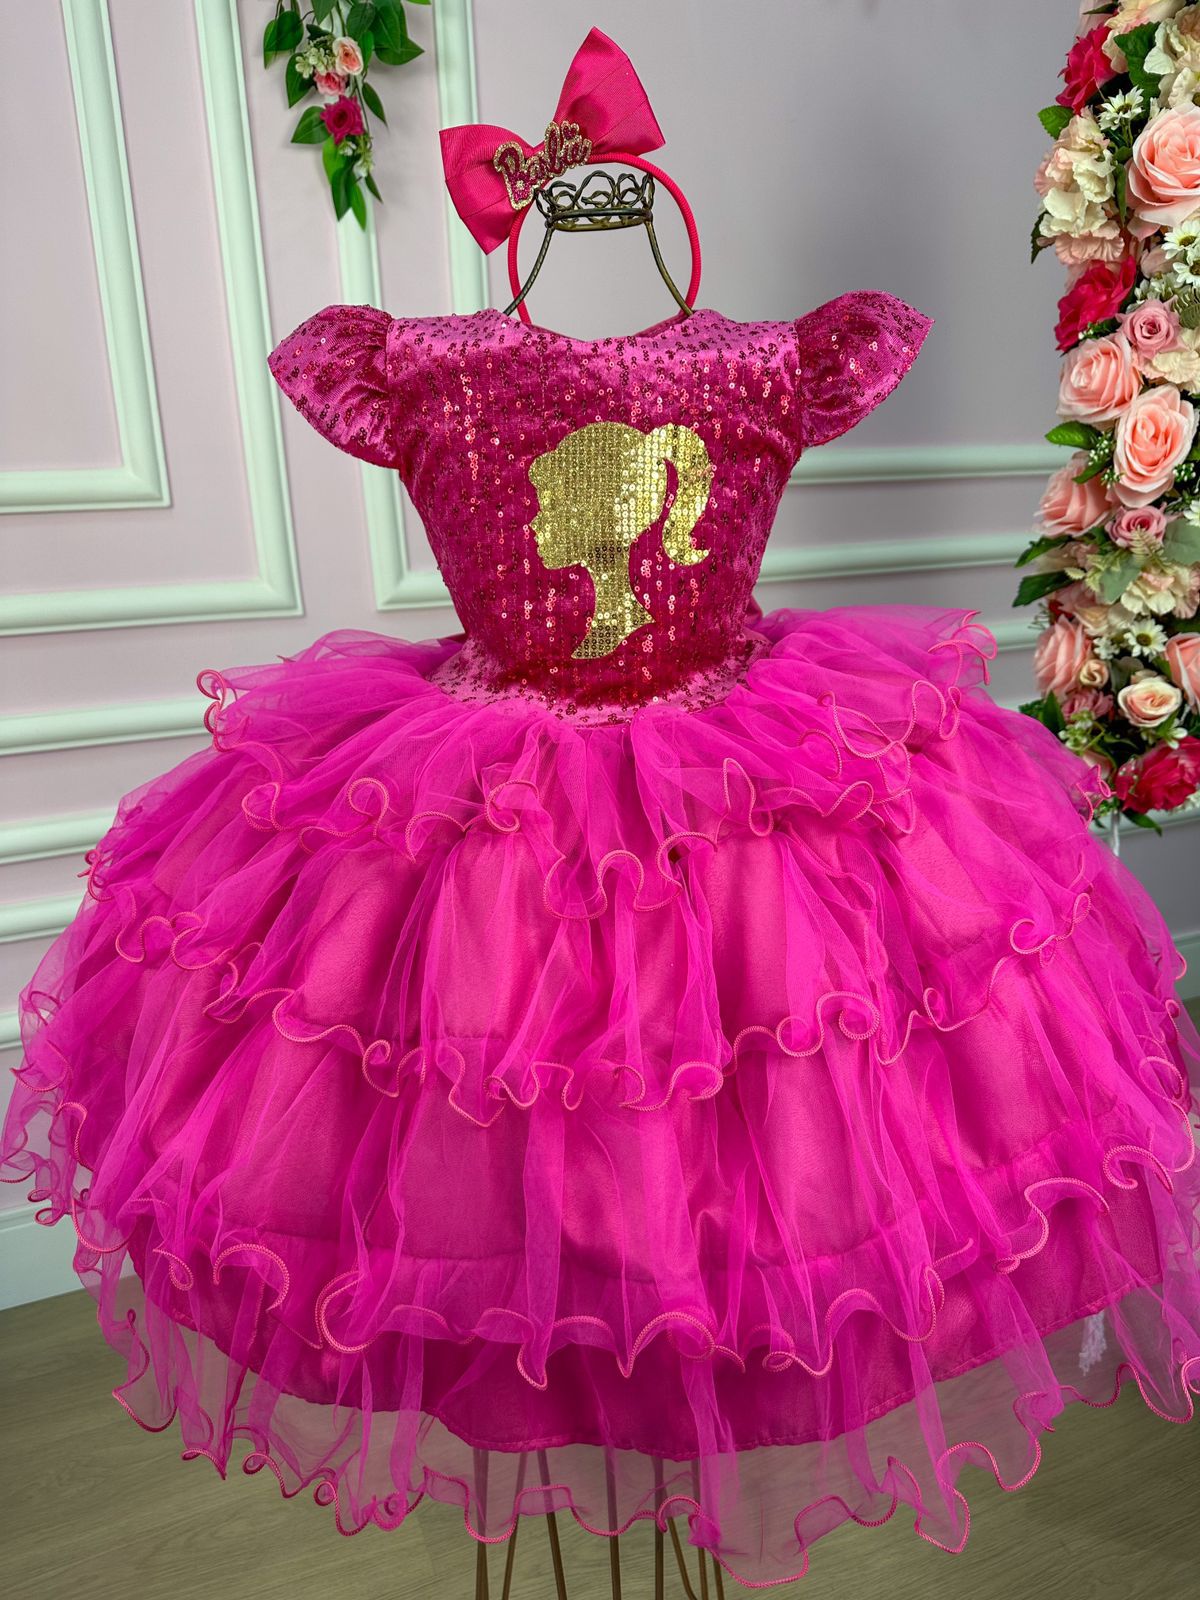 Vestido Barbie Girls Pink Luxo Laço No Ombro Menina Infantil